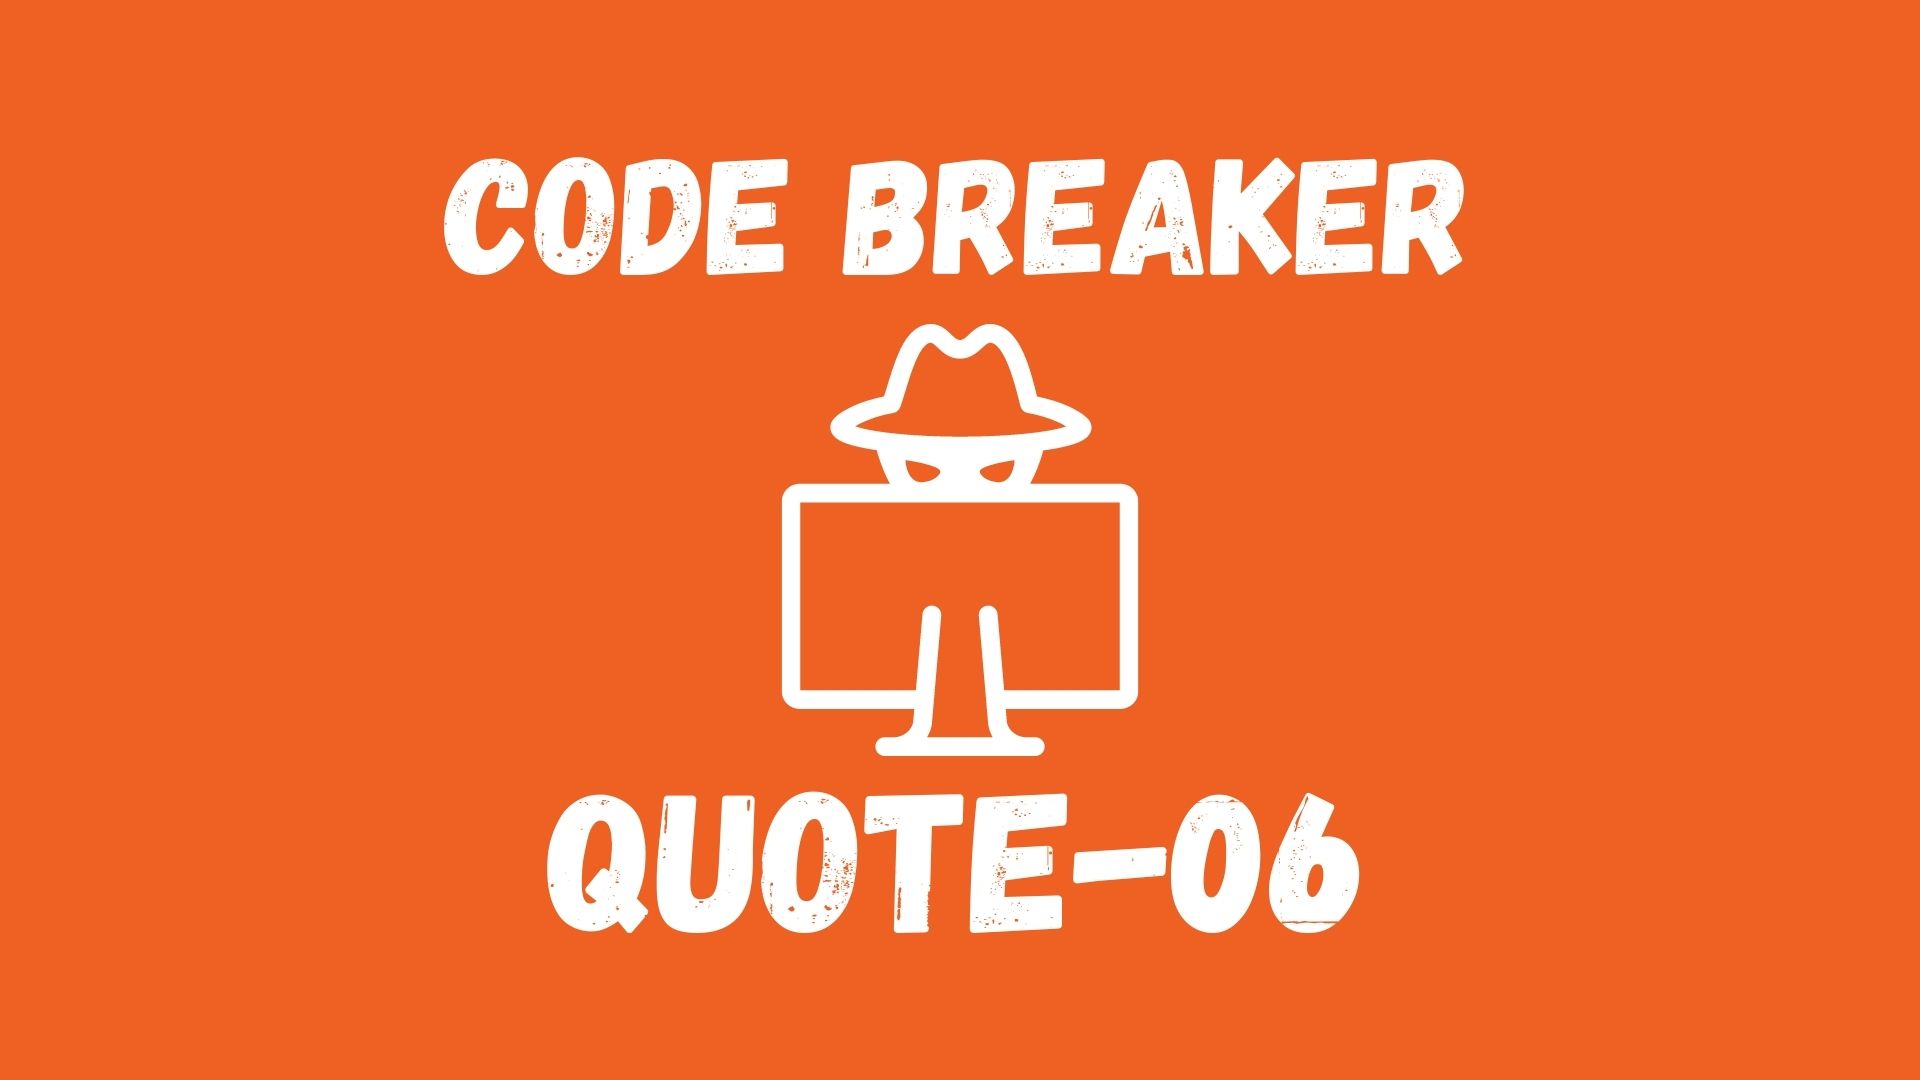 Code Breaker Decipher the Quote 06